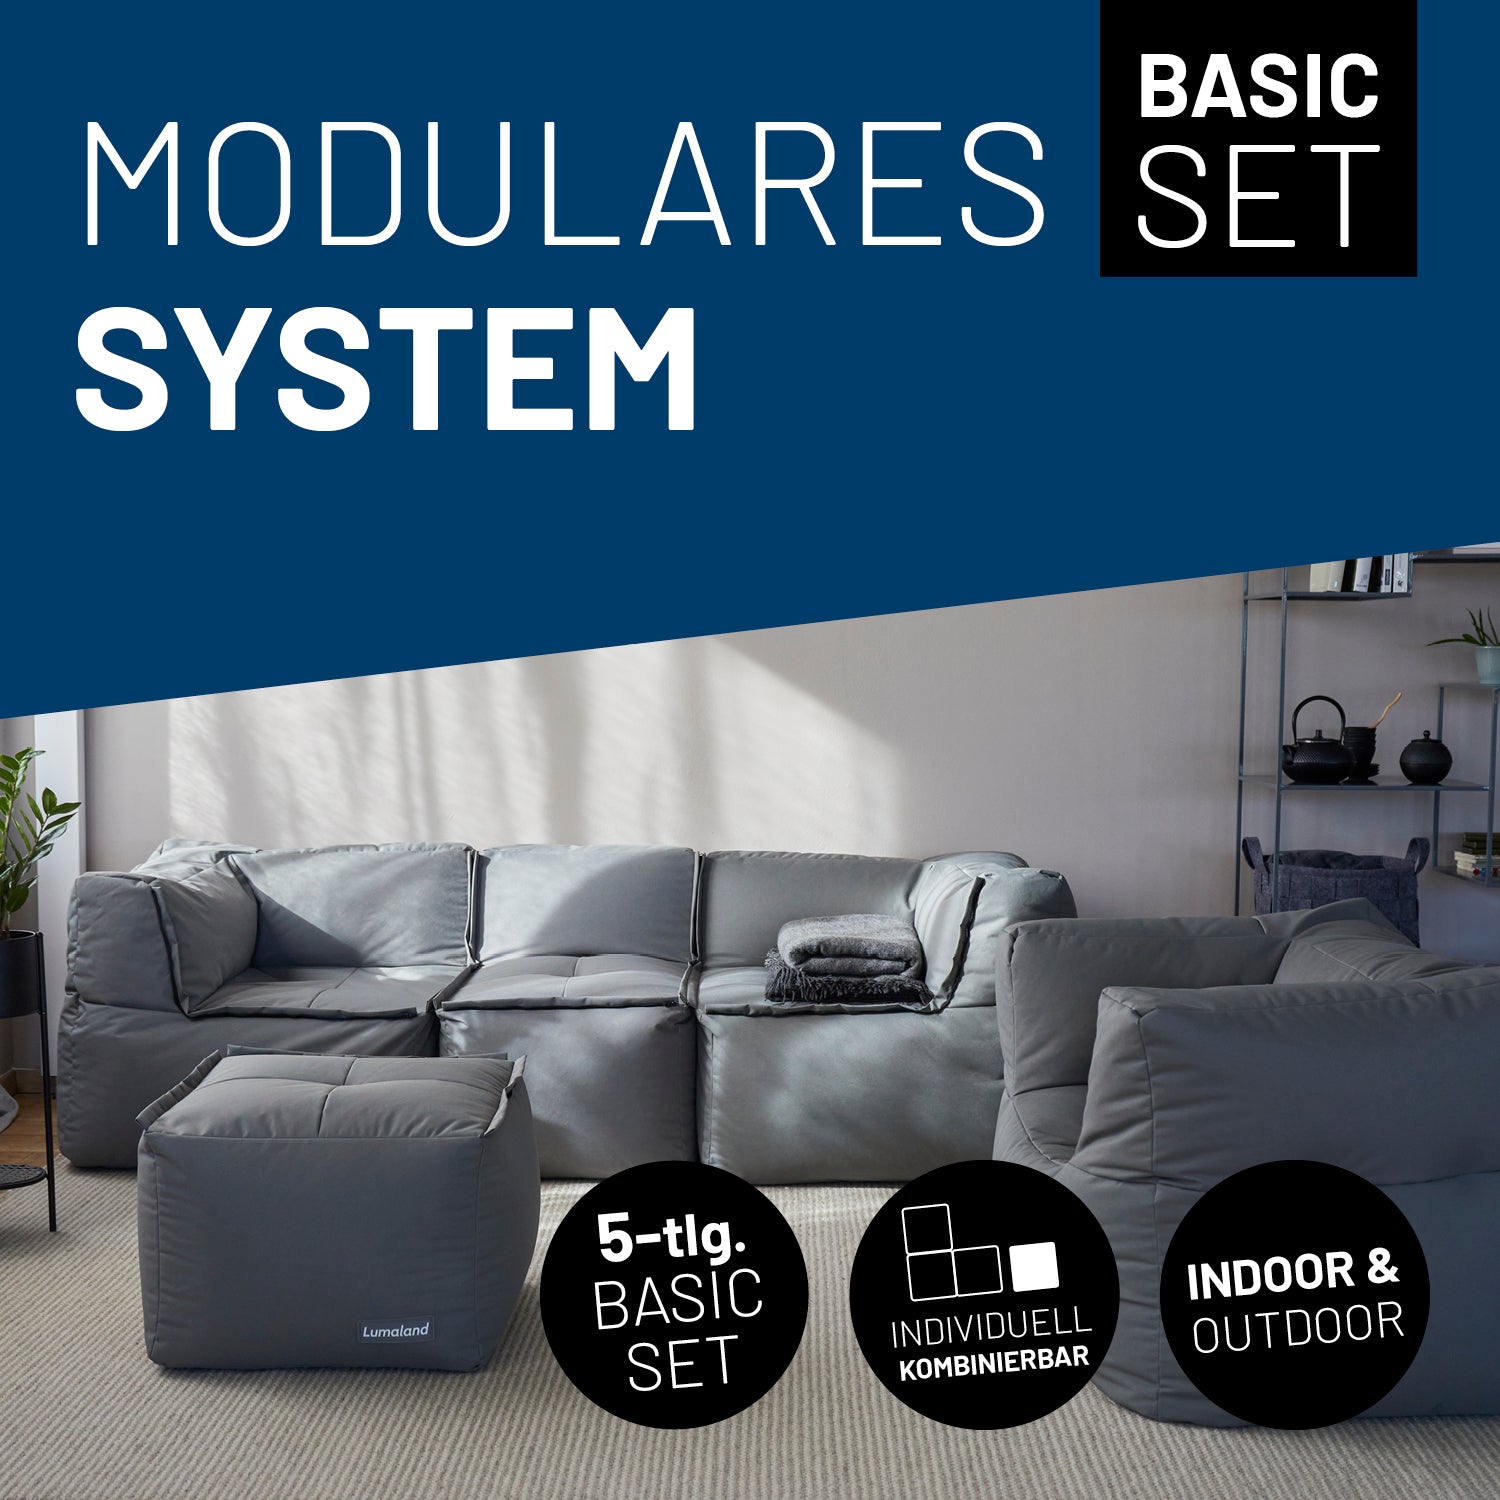 Basic Set (5-tlg.) - Modulares System - indoor & outdoor - Grau